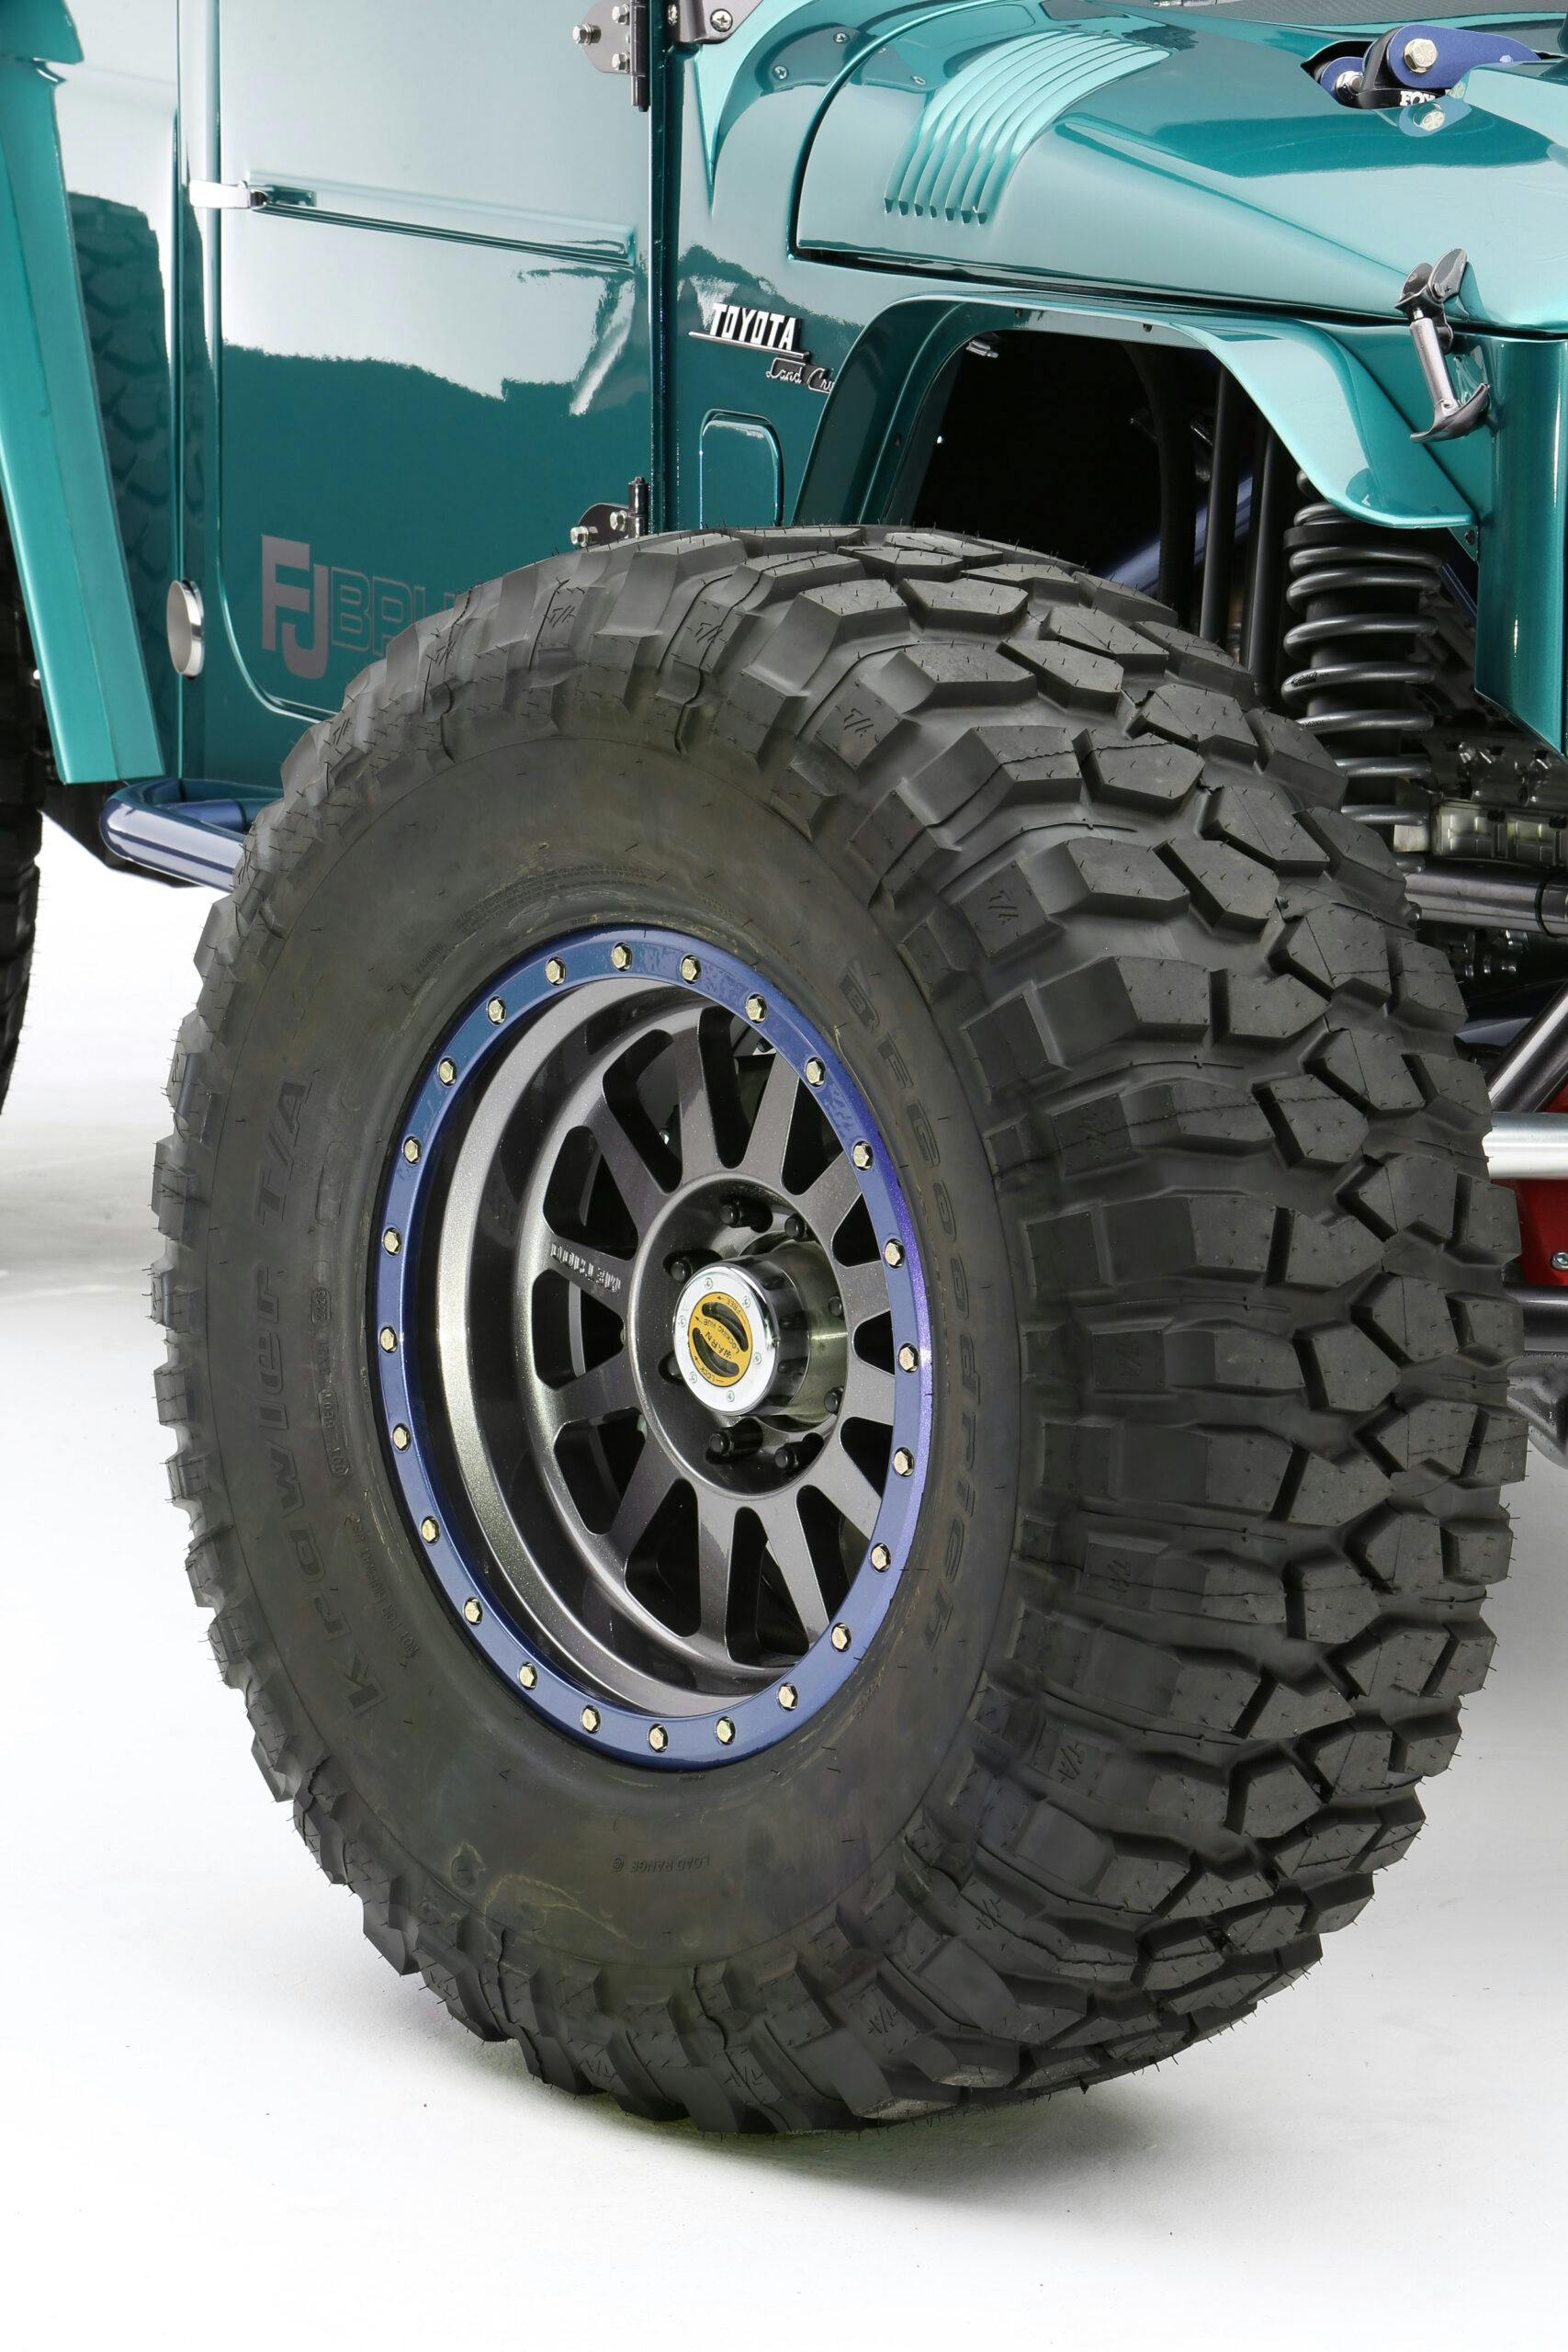 Toyota FJ Bruiser wheel and tire detail